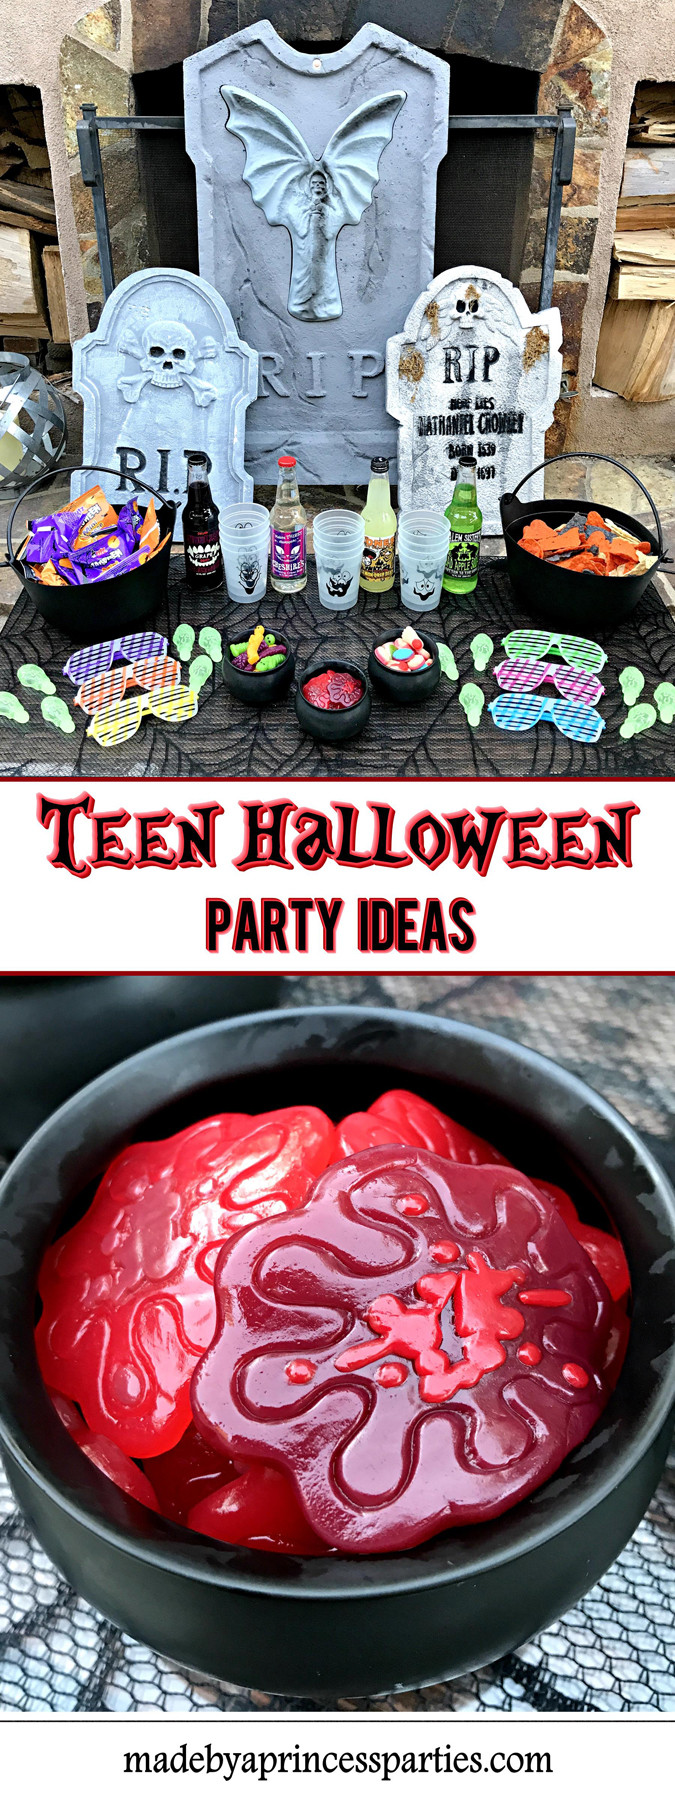 Halloween Party Food Ideas For Teens
 Teen Halloween Party Ideas